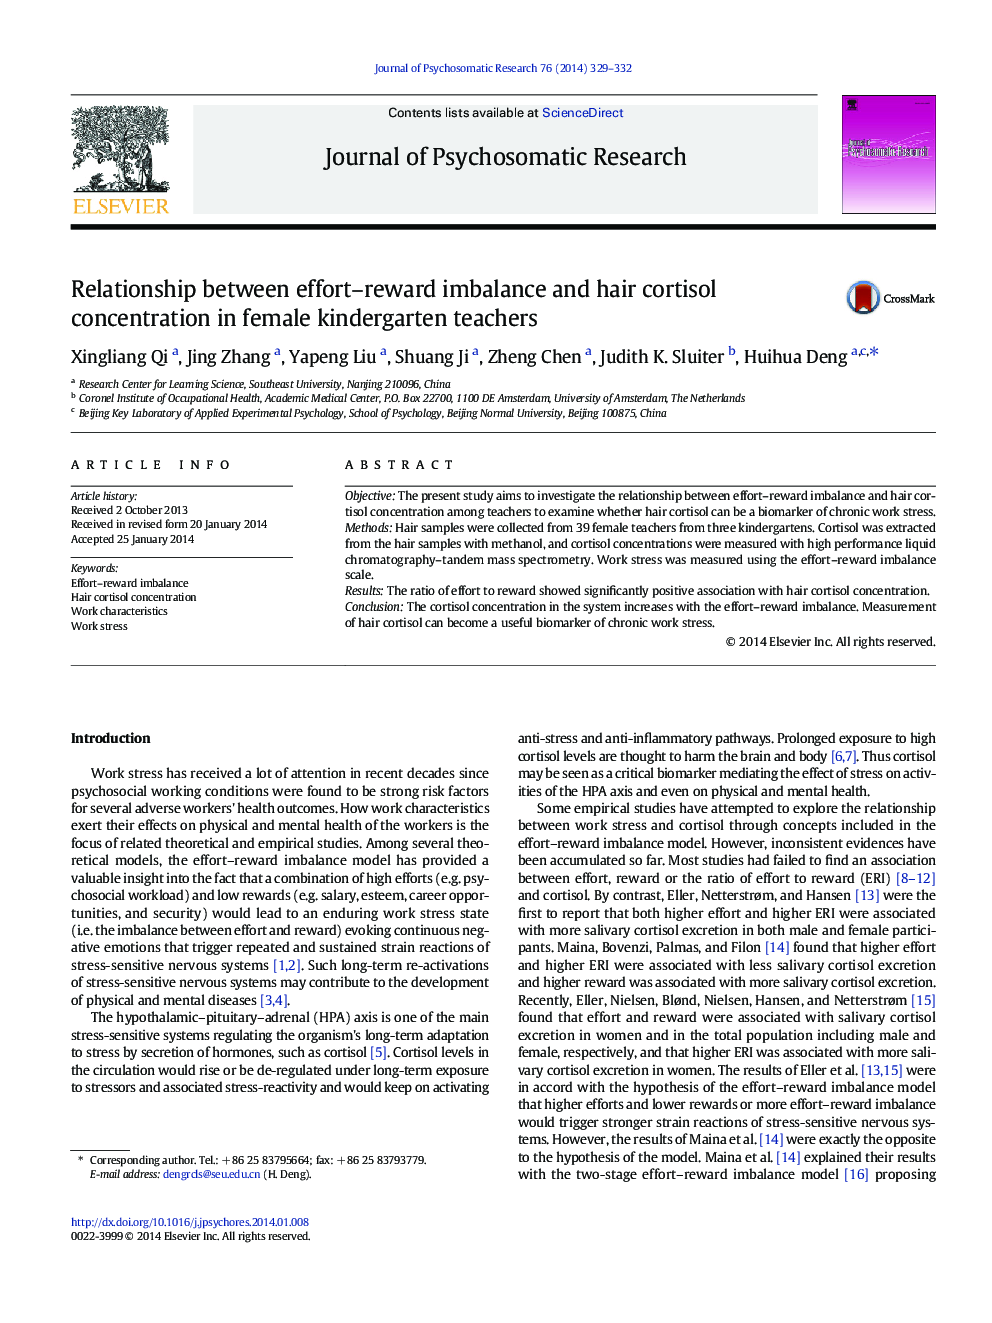 Relationship between effort–reward imbalance and hair cortisol concentration in female kindergarten teachers